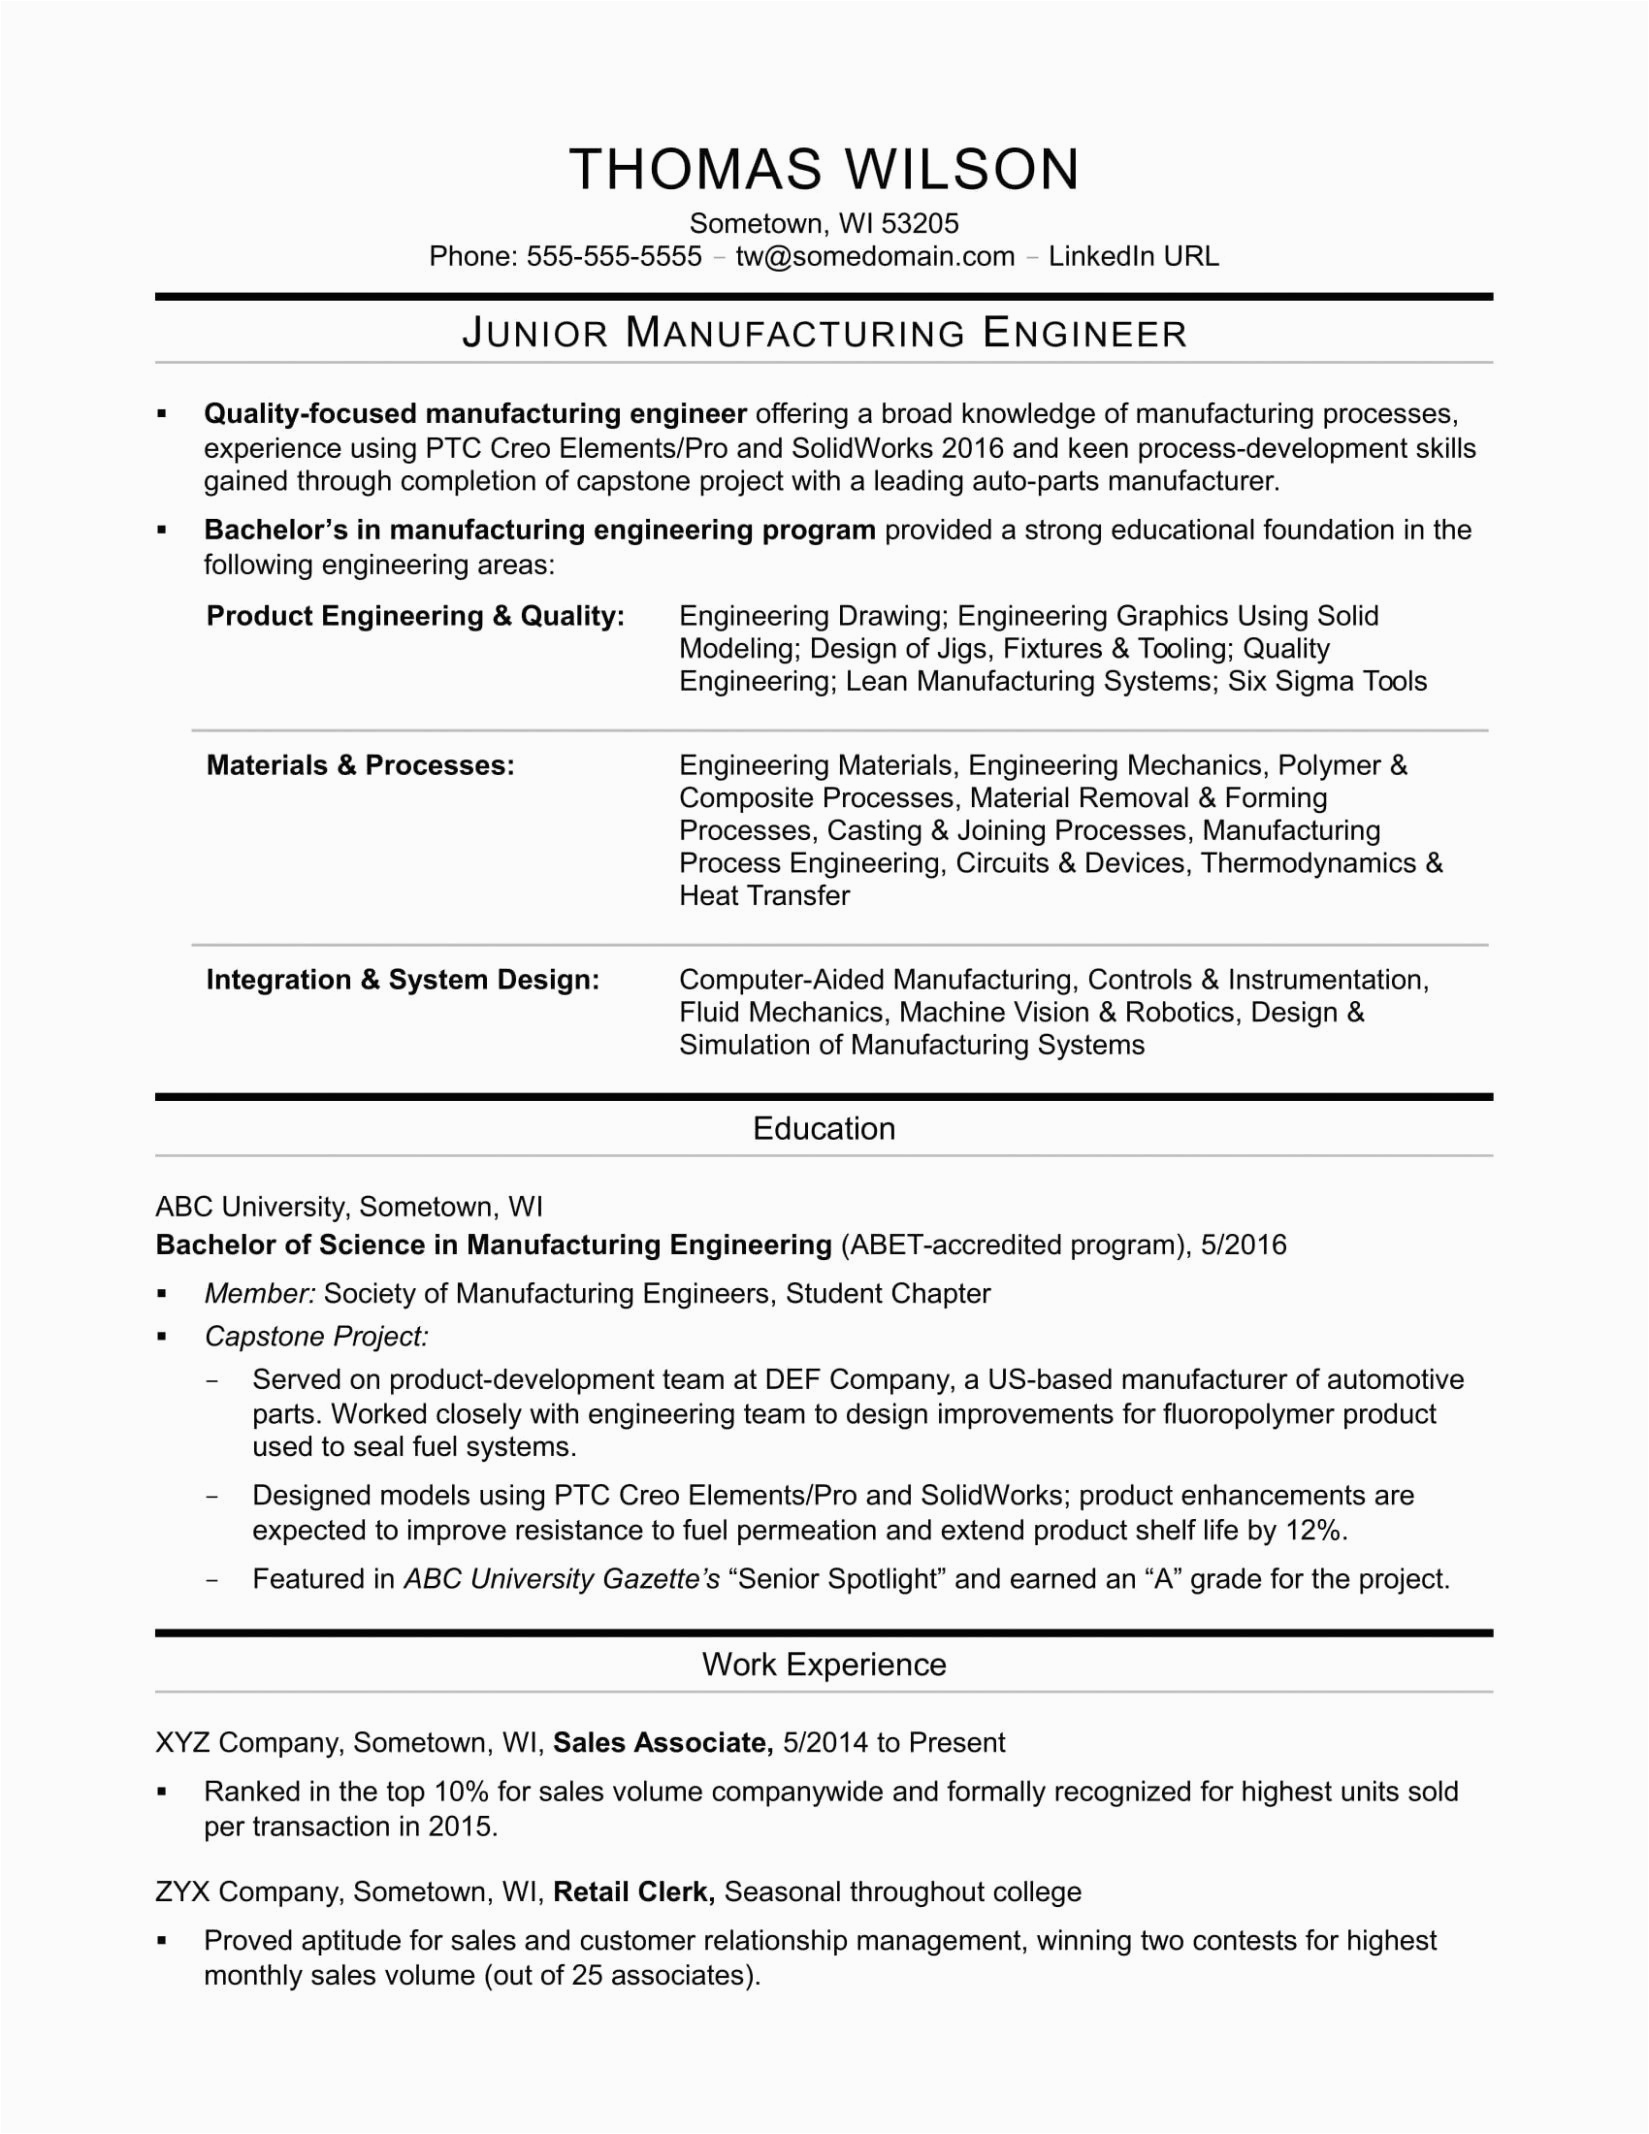 Sample Resume for Industrial Engineer Fresher Devops Engineer Resume for Fresher Best Resume Examples